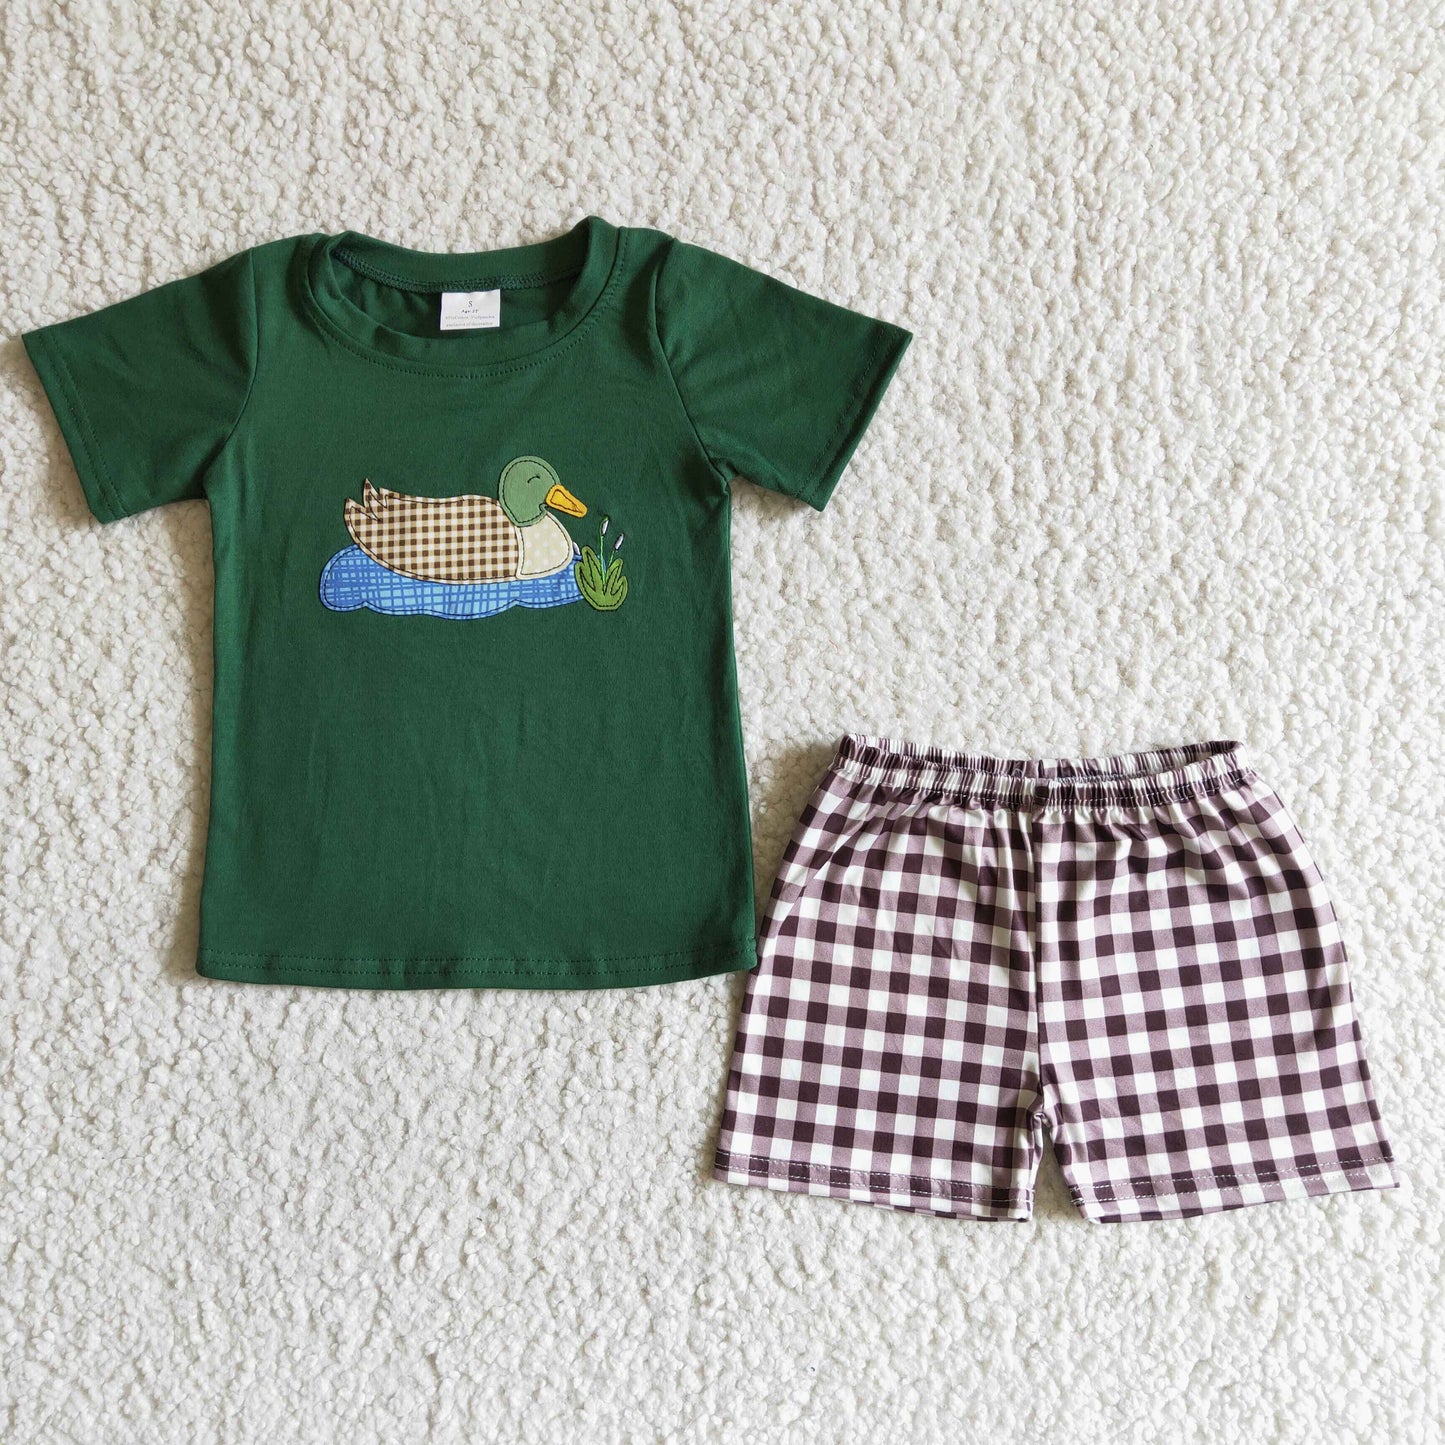 Duck embroidery cotton shirt plaid shorts boy summer clothes